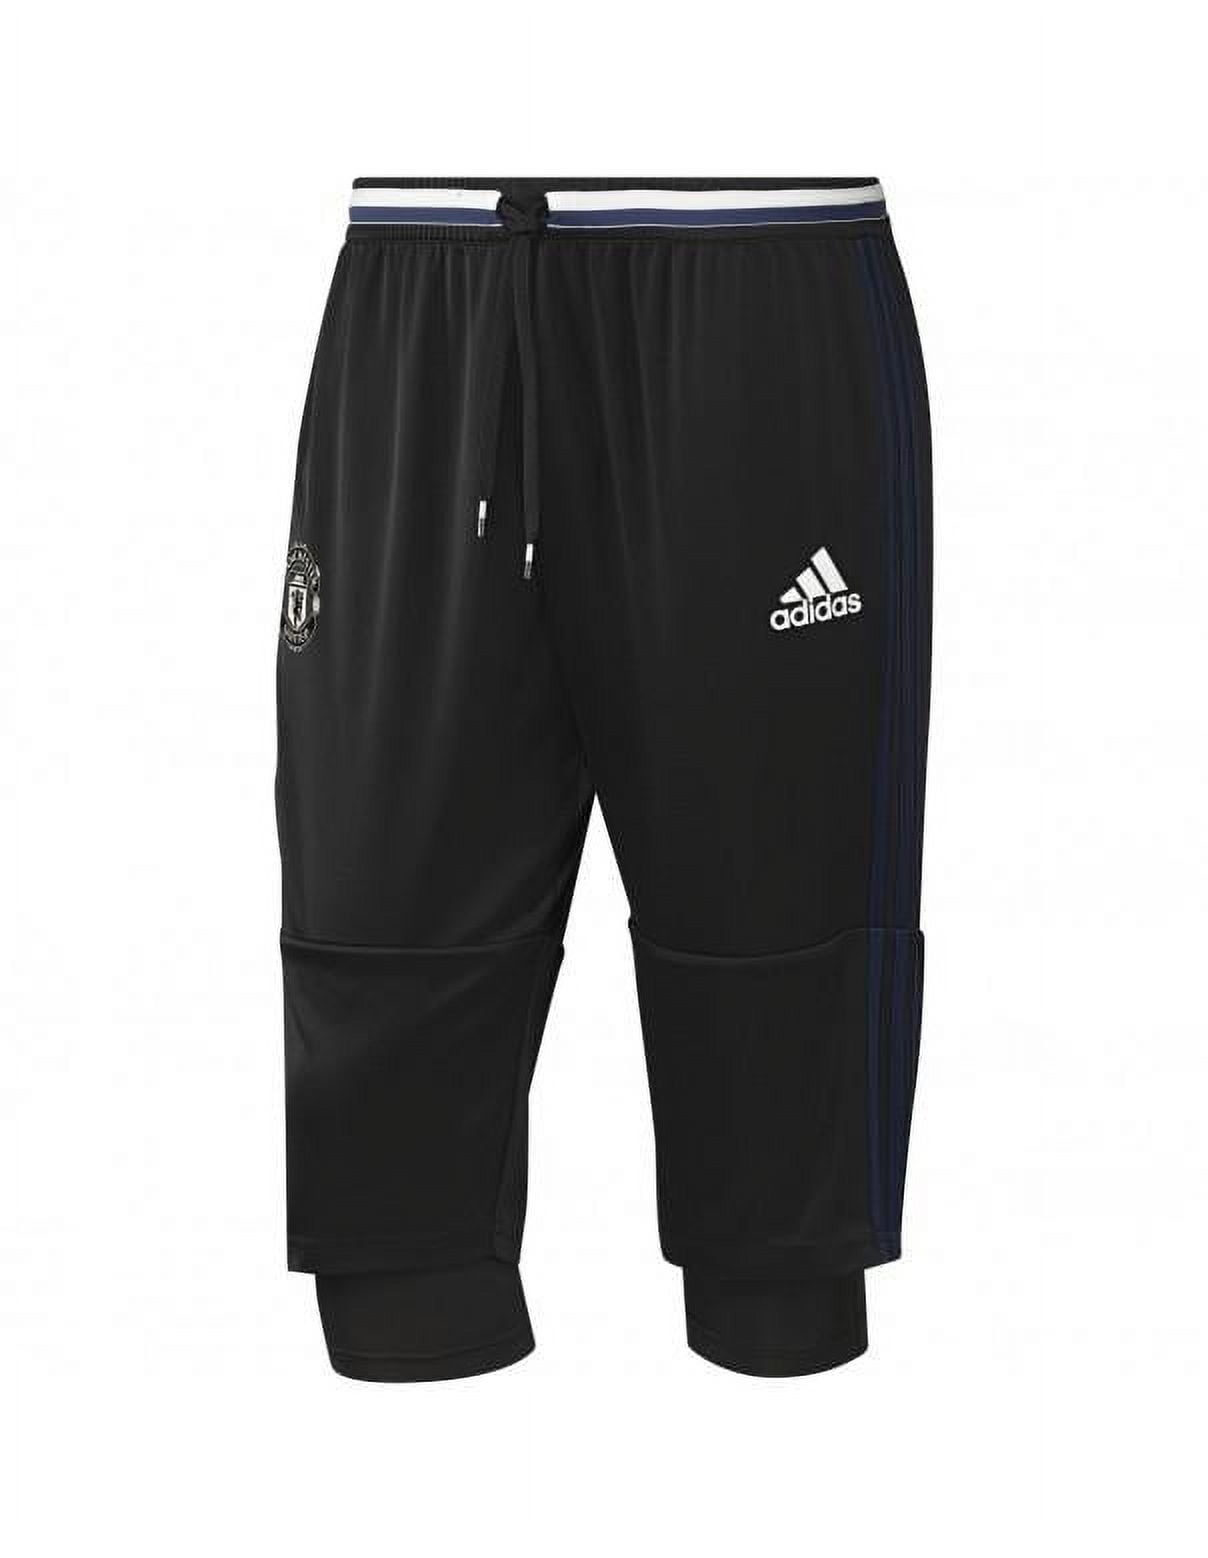 Adidas Men TIRO 21 Training 3/4 Shorts Pants Black Casual Bottom GYM Pant  GM7375 | eBay